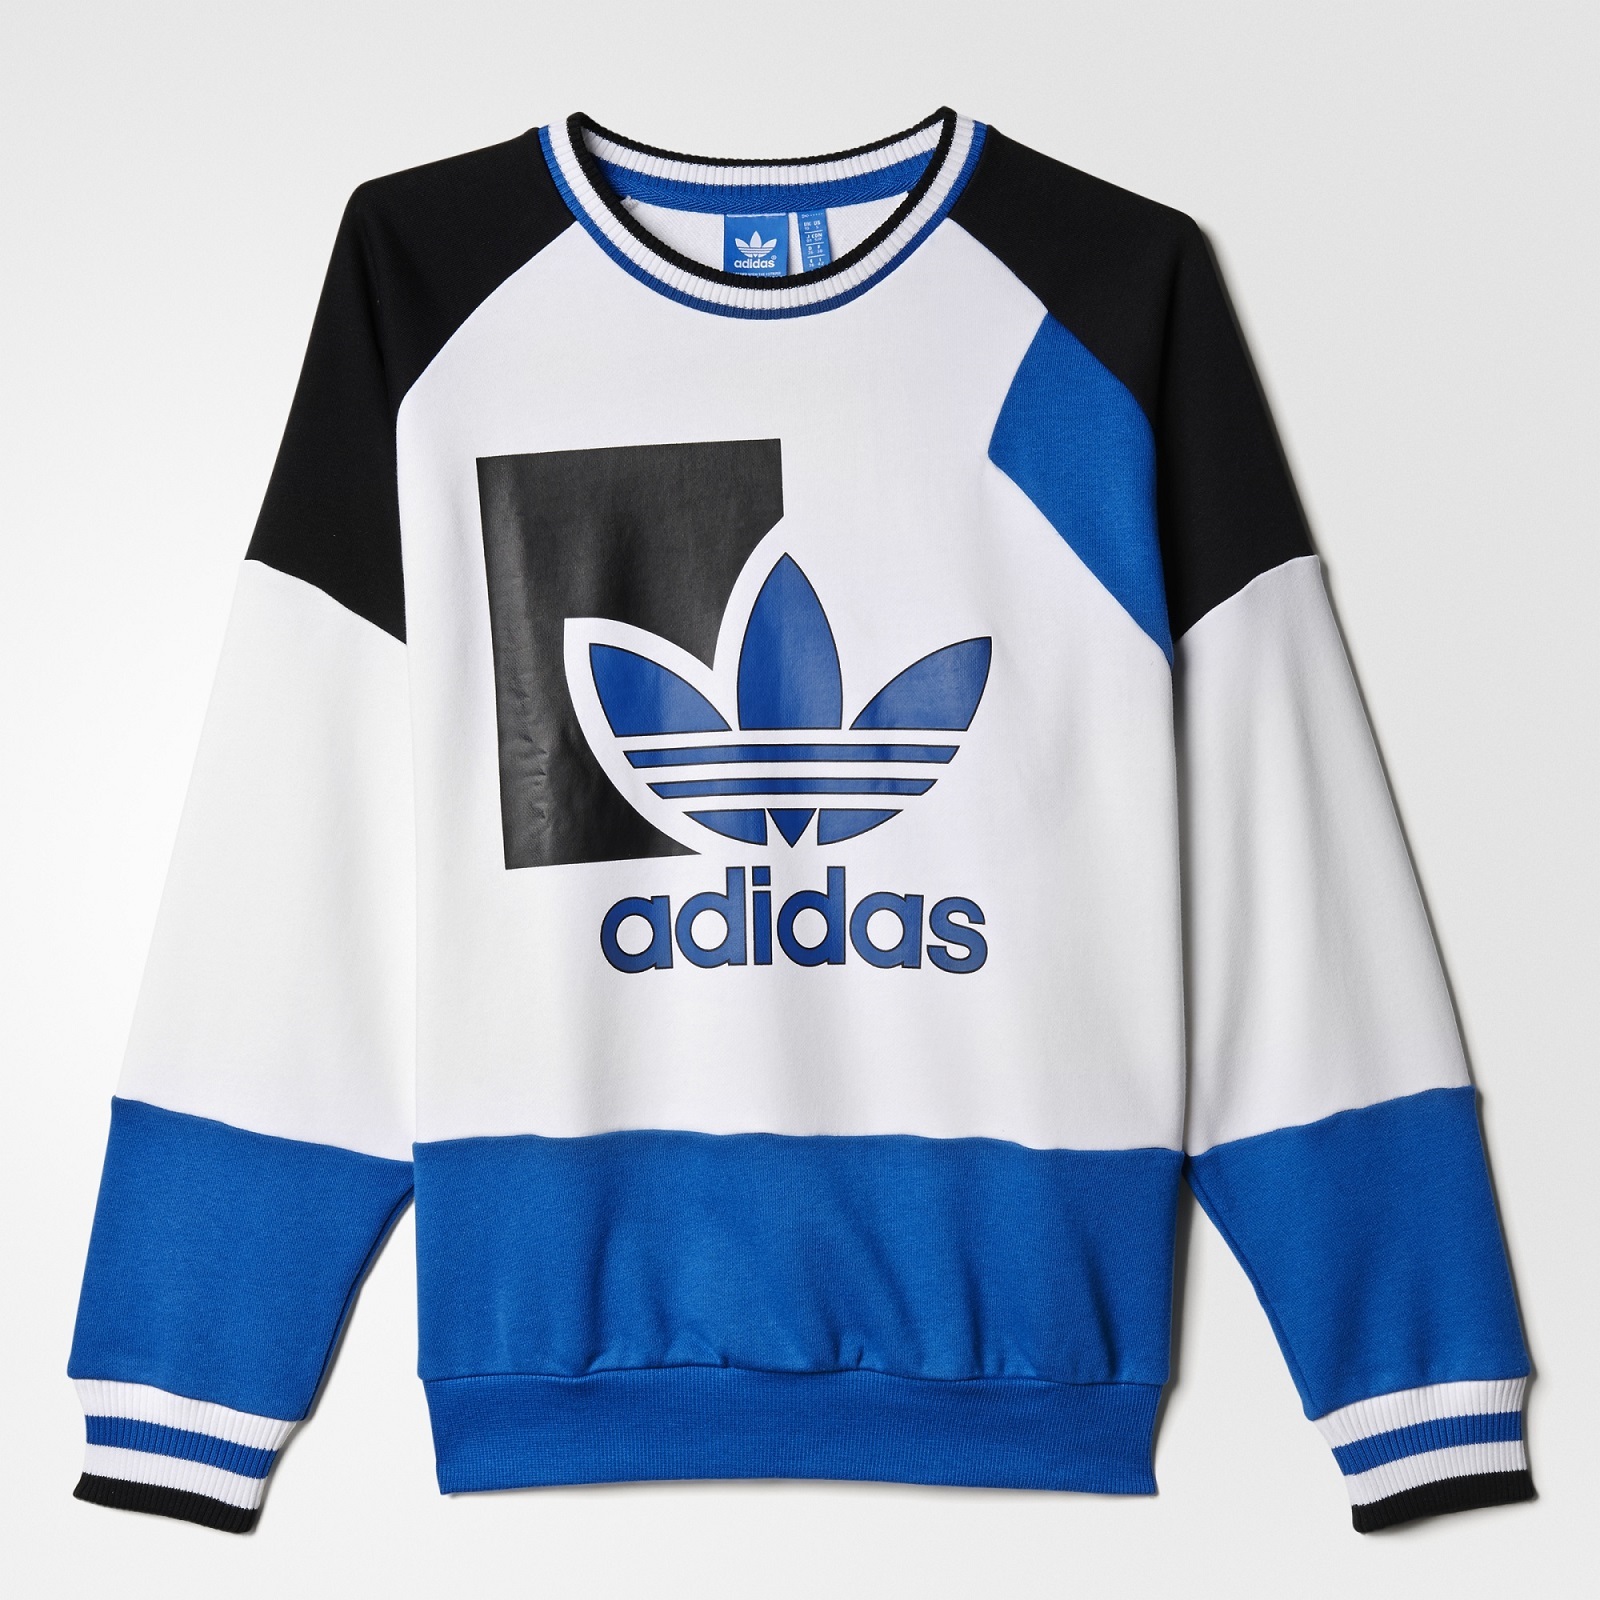 New Adidas Originals Running Hoodie 32 similar items